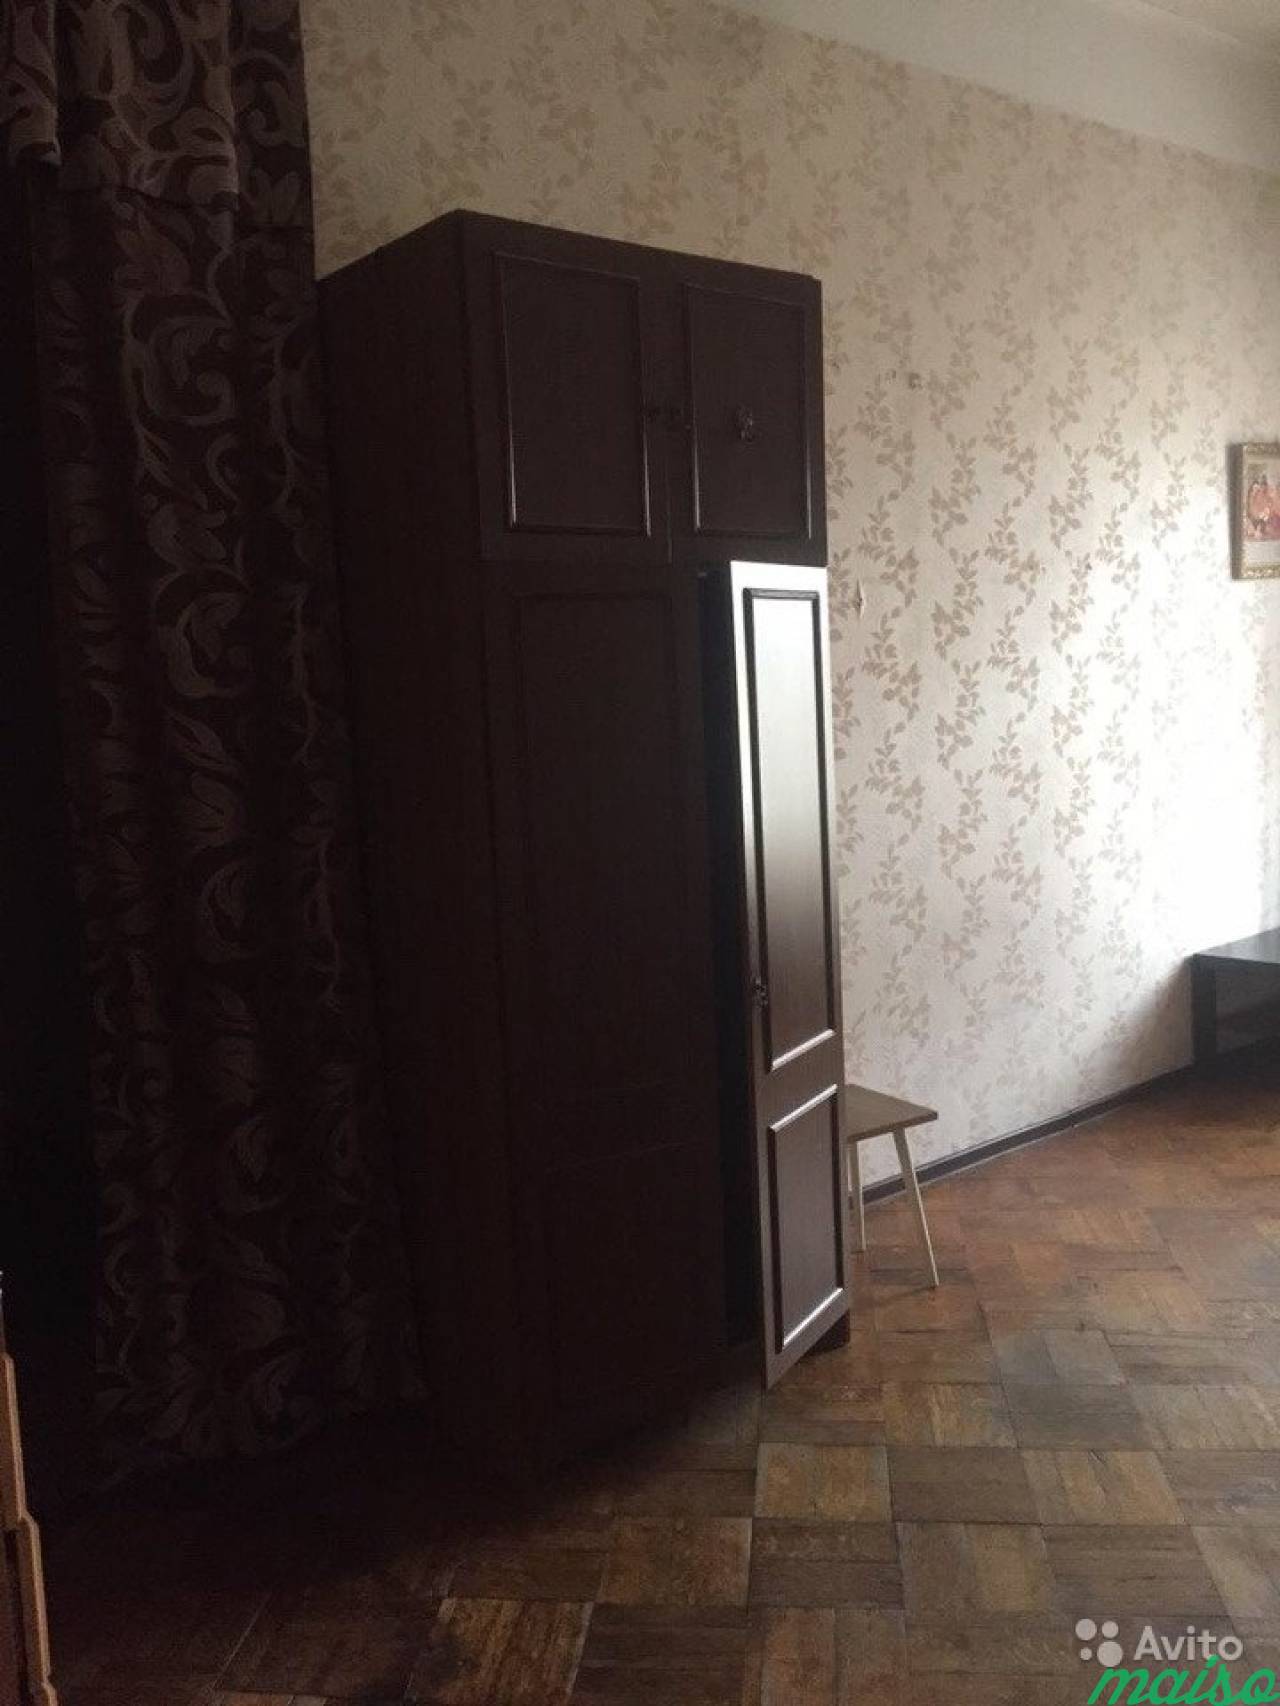 Комната 35.6 м² в 5-к, 2/5 эт. в Санкт-Петербурге. Фото 1